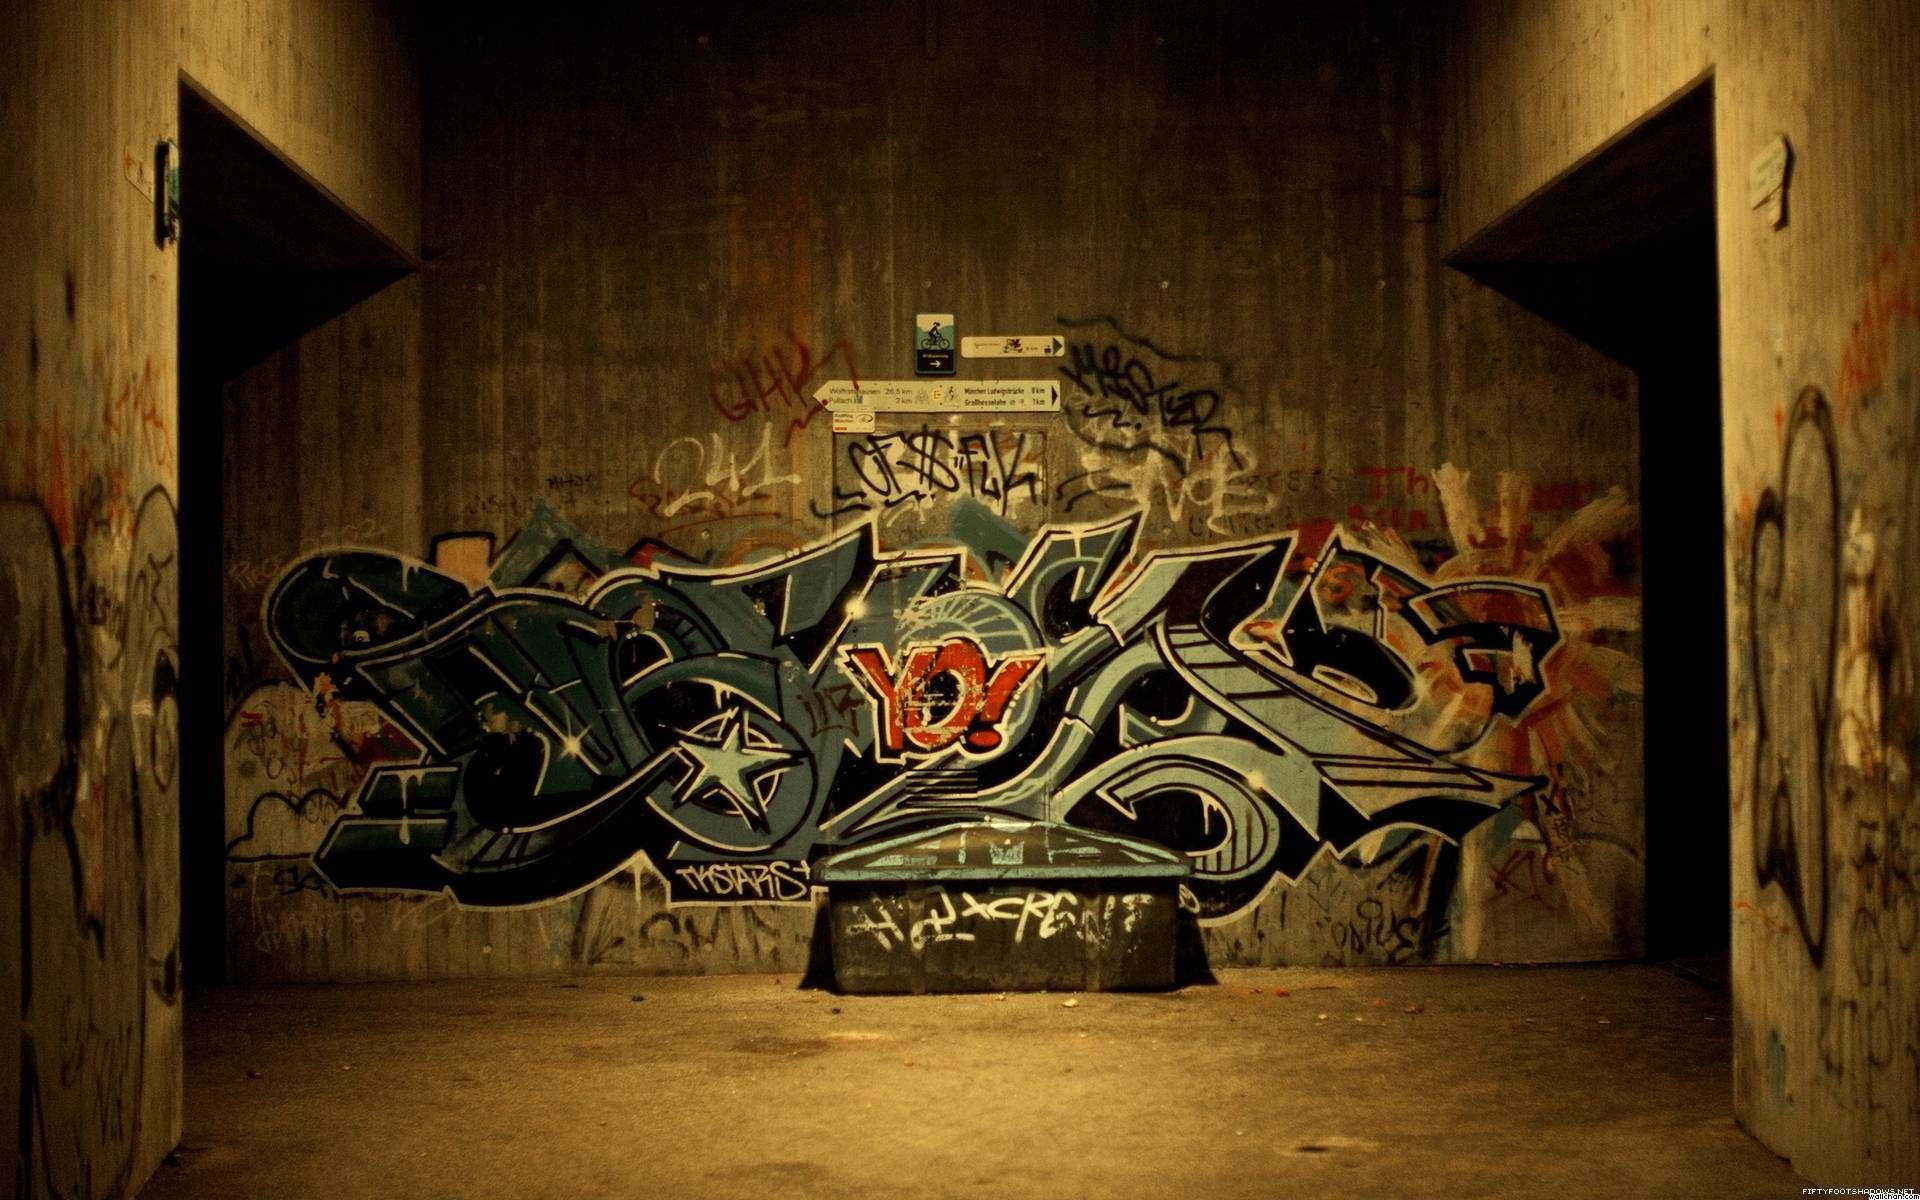 Underground Urban Art Graffiti Background